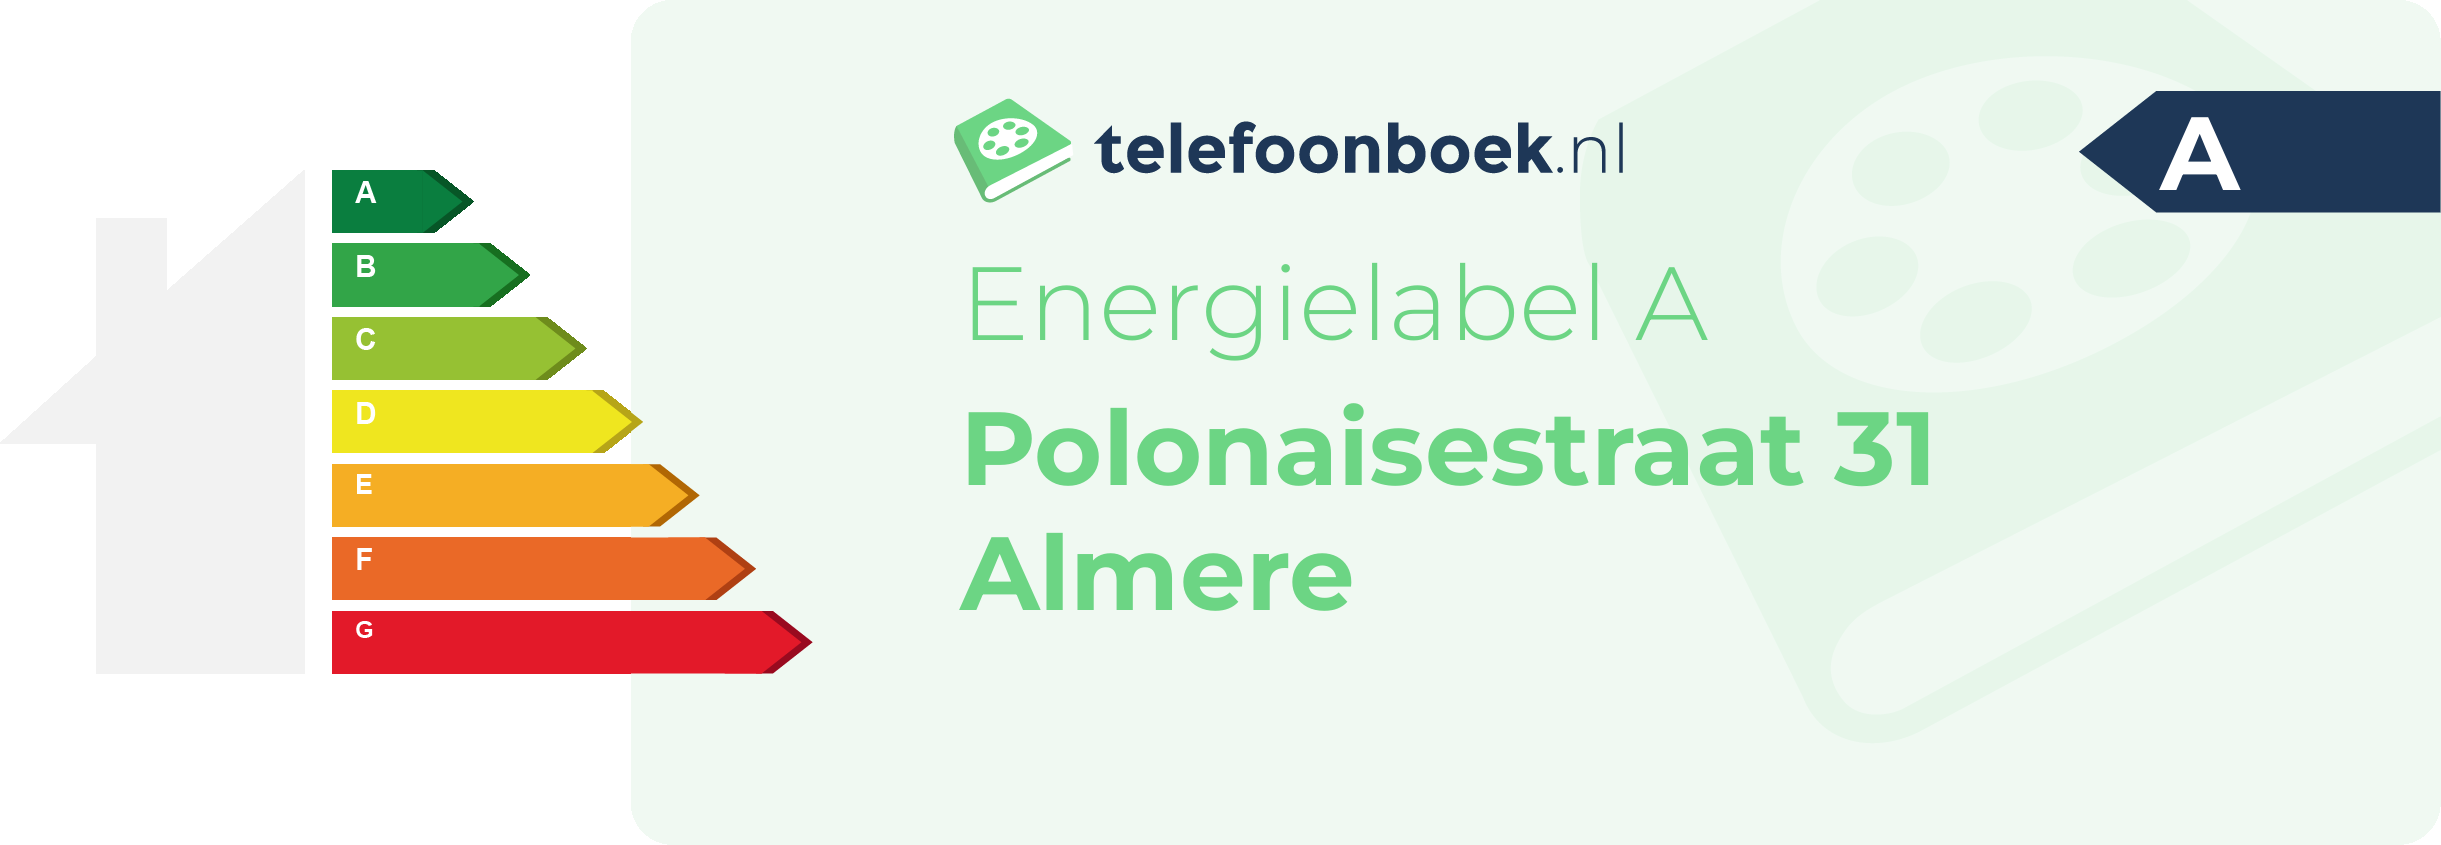 Energielabel Polonaisestraat 31 Almere